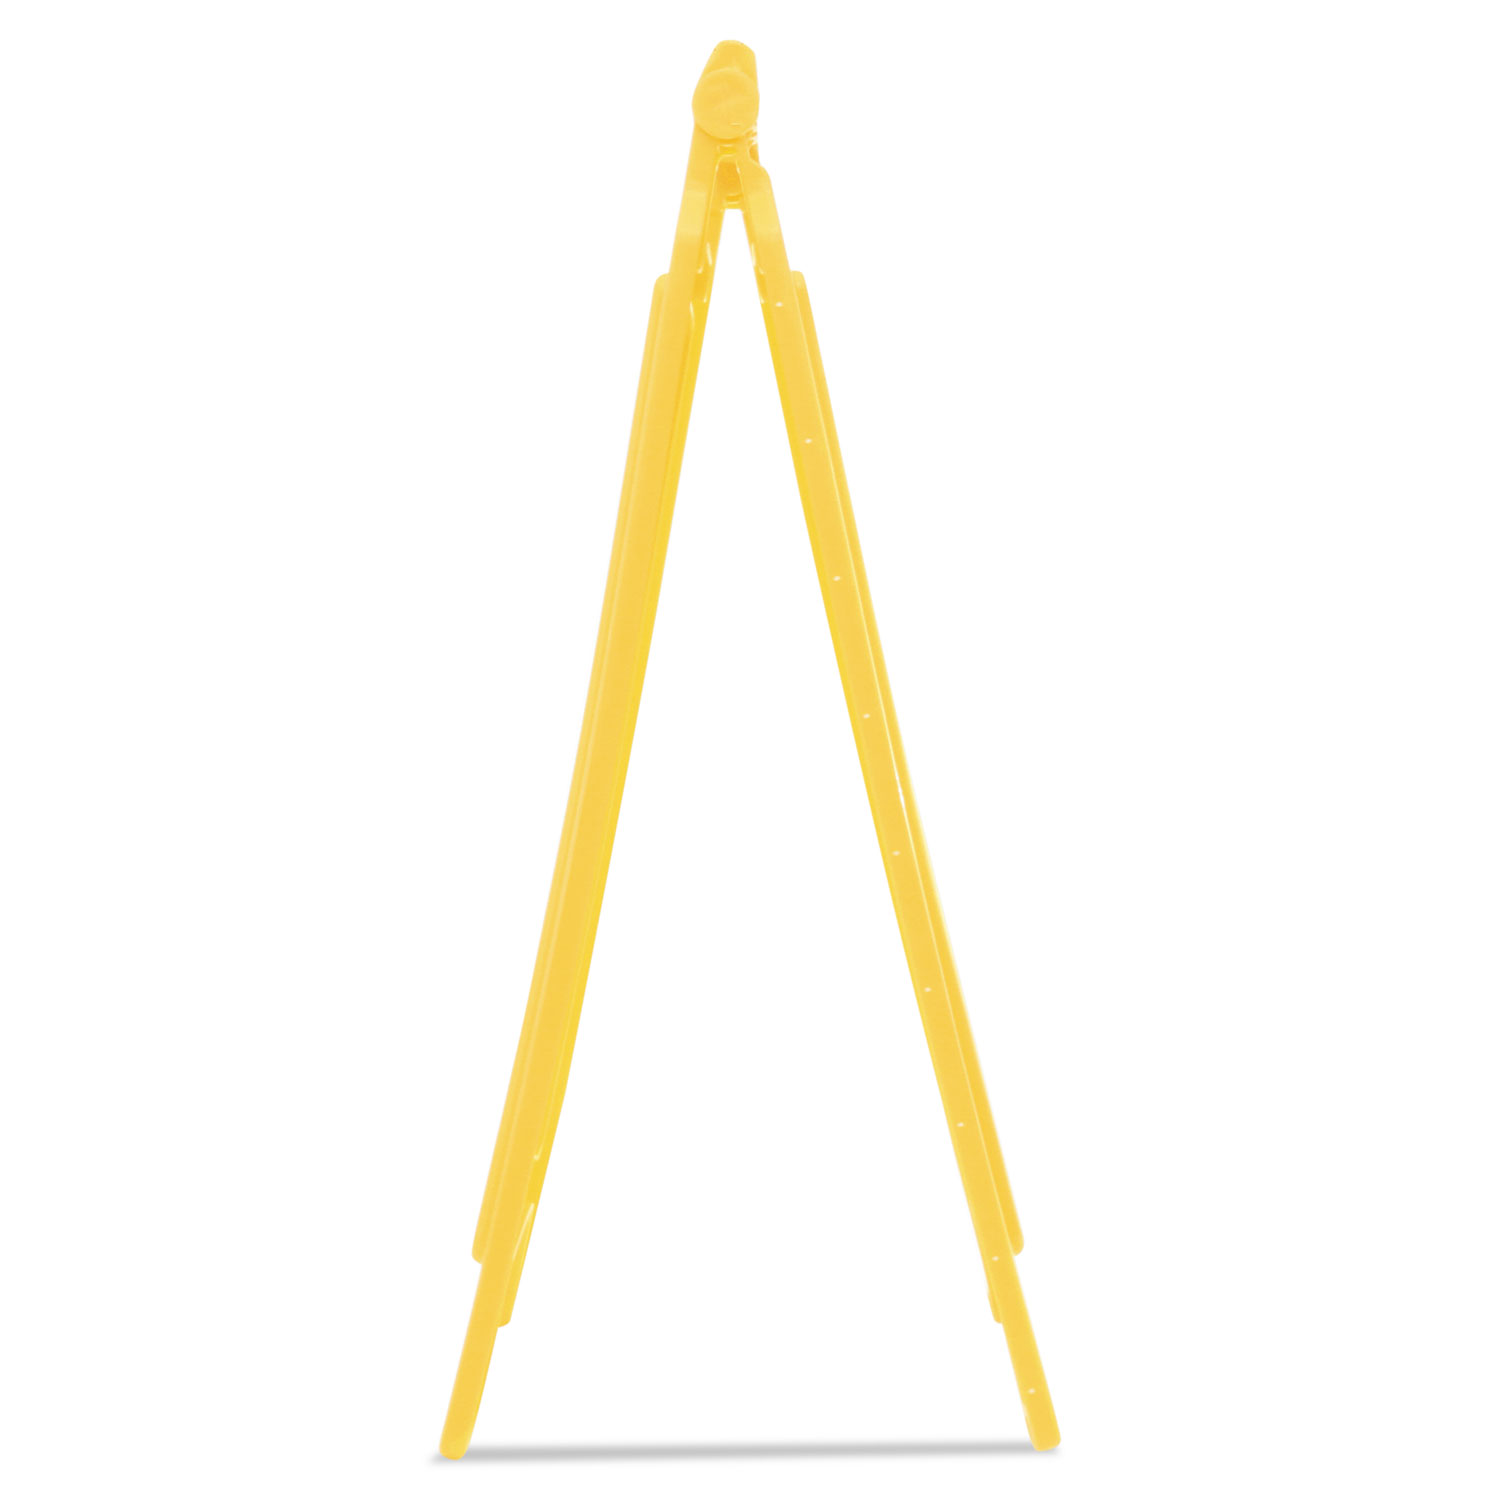 Caution Wet Floor Floor Sign, Plastic, 11 x 12 x 25, Bright Yellow, 6/Carton